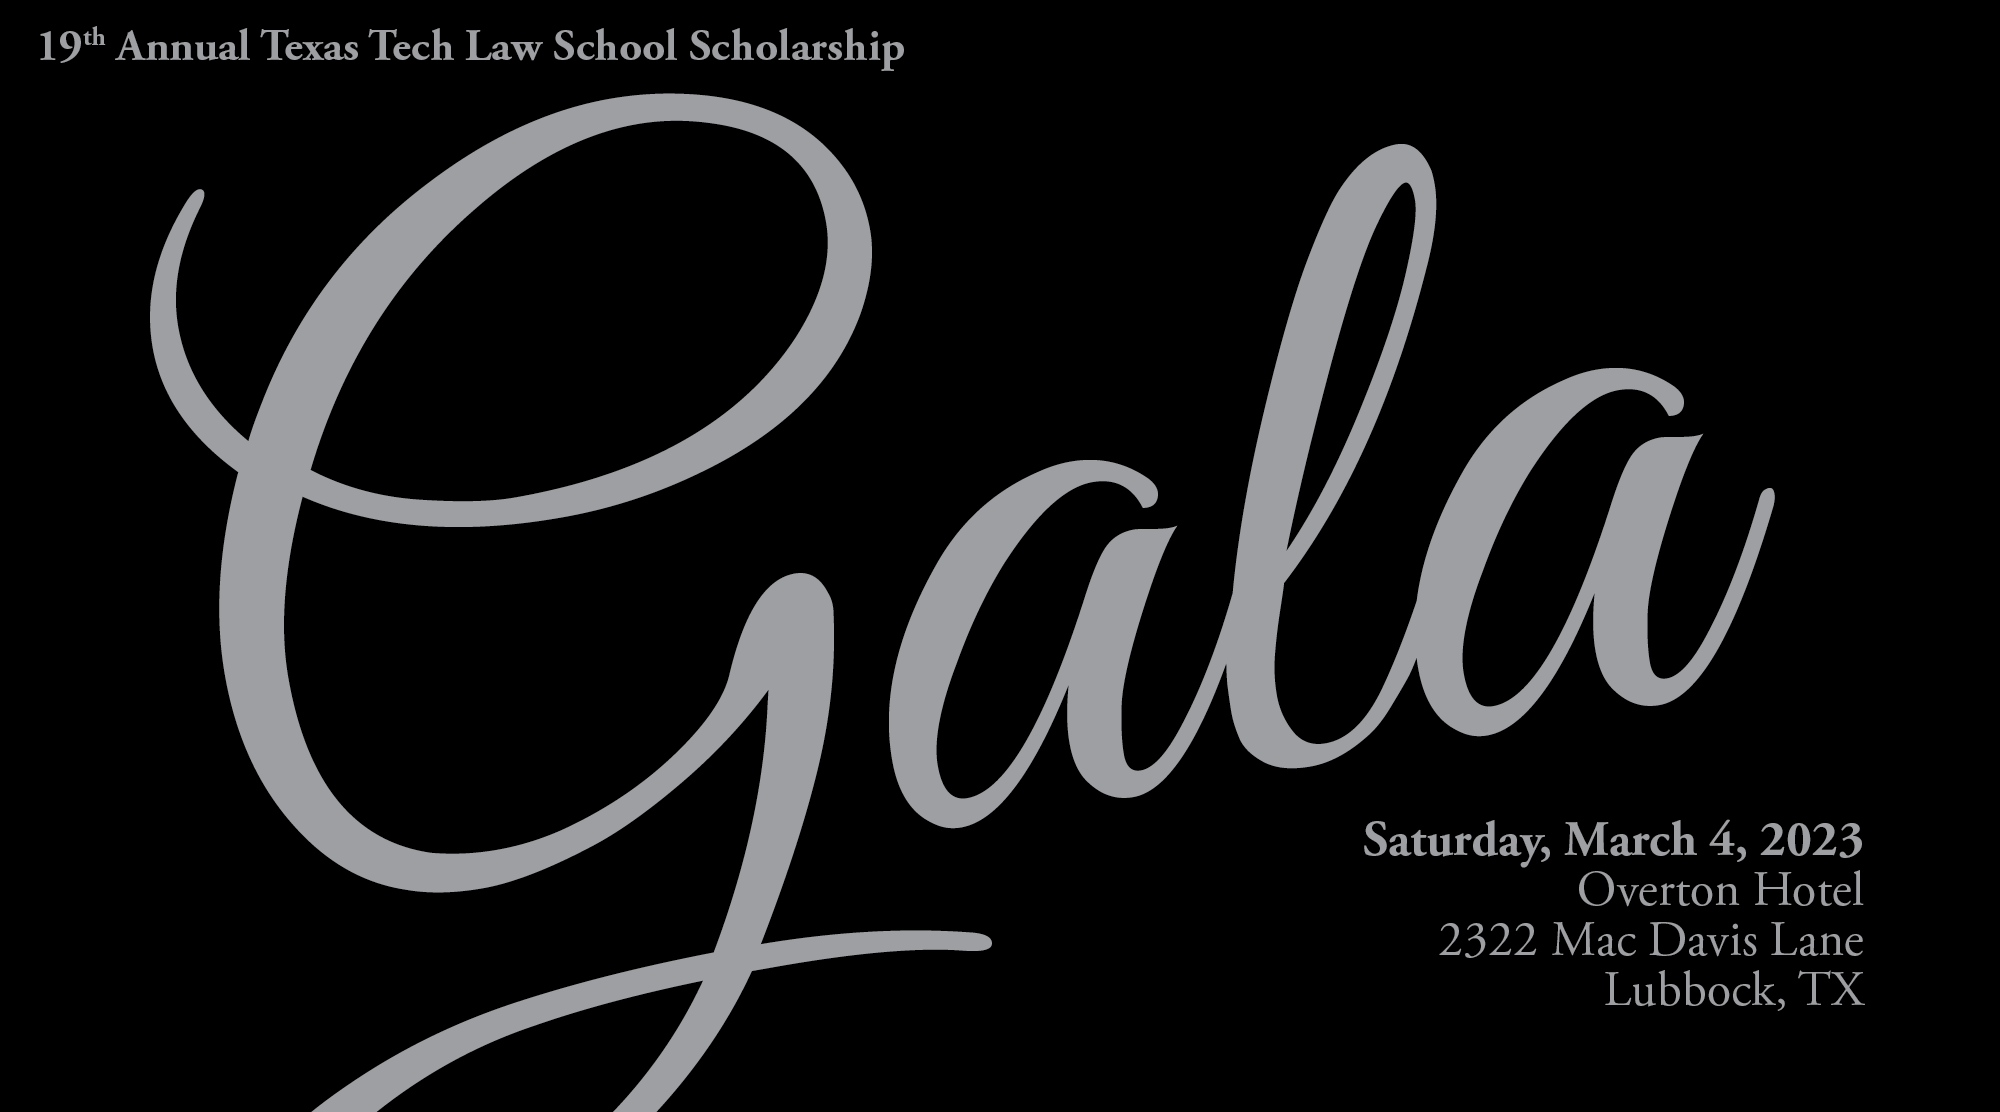 19th Annual Scholarship Gala - March 4, 2023